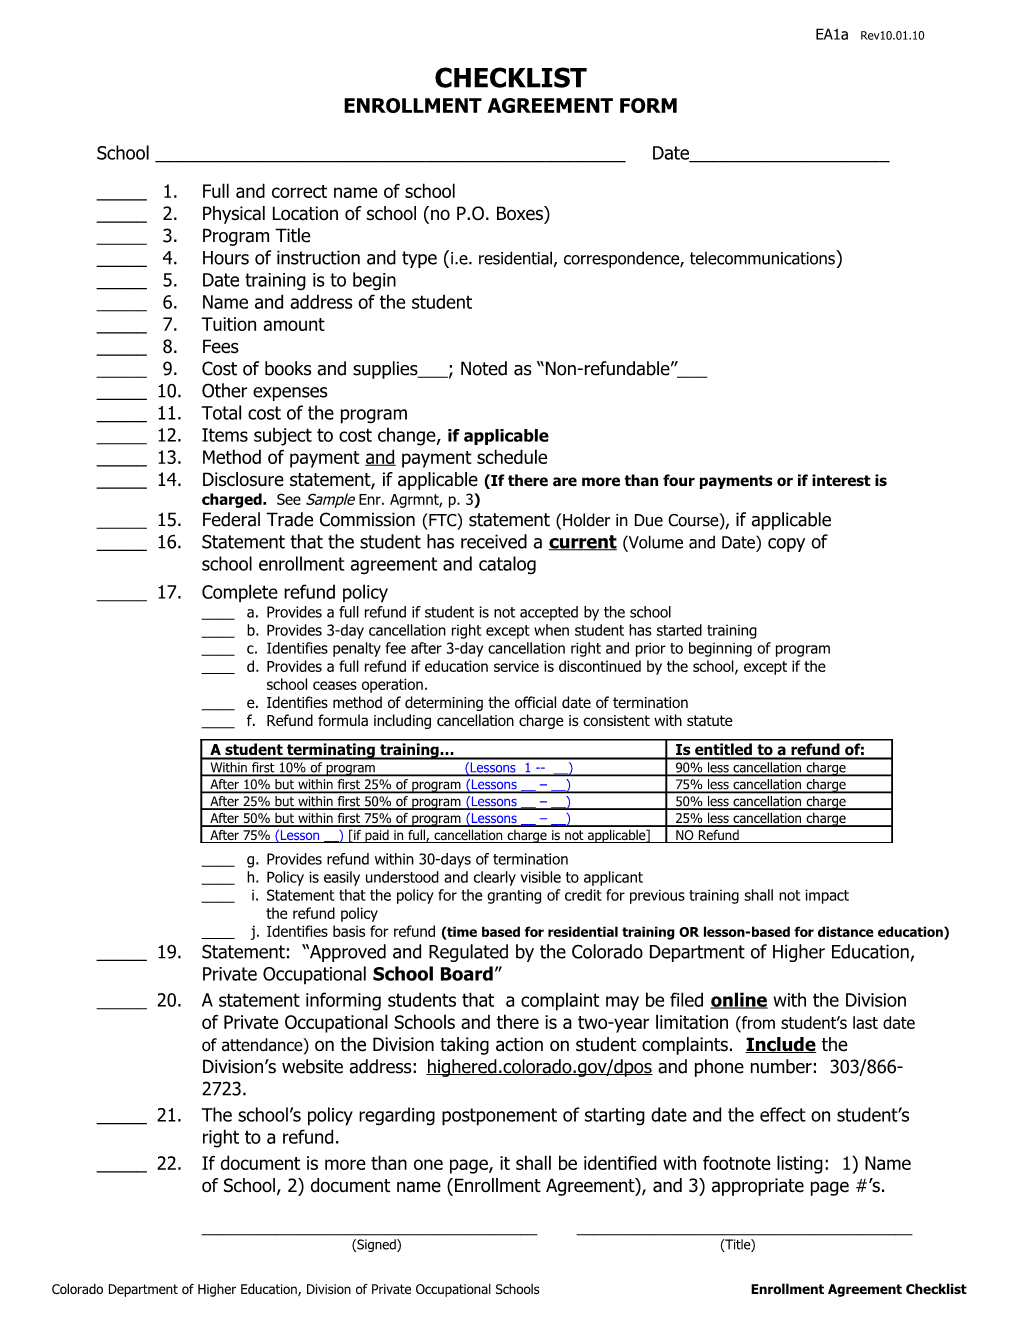 Enrollment Agreement Form Checklist